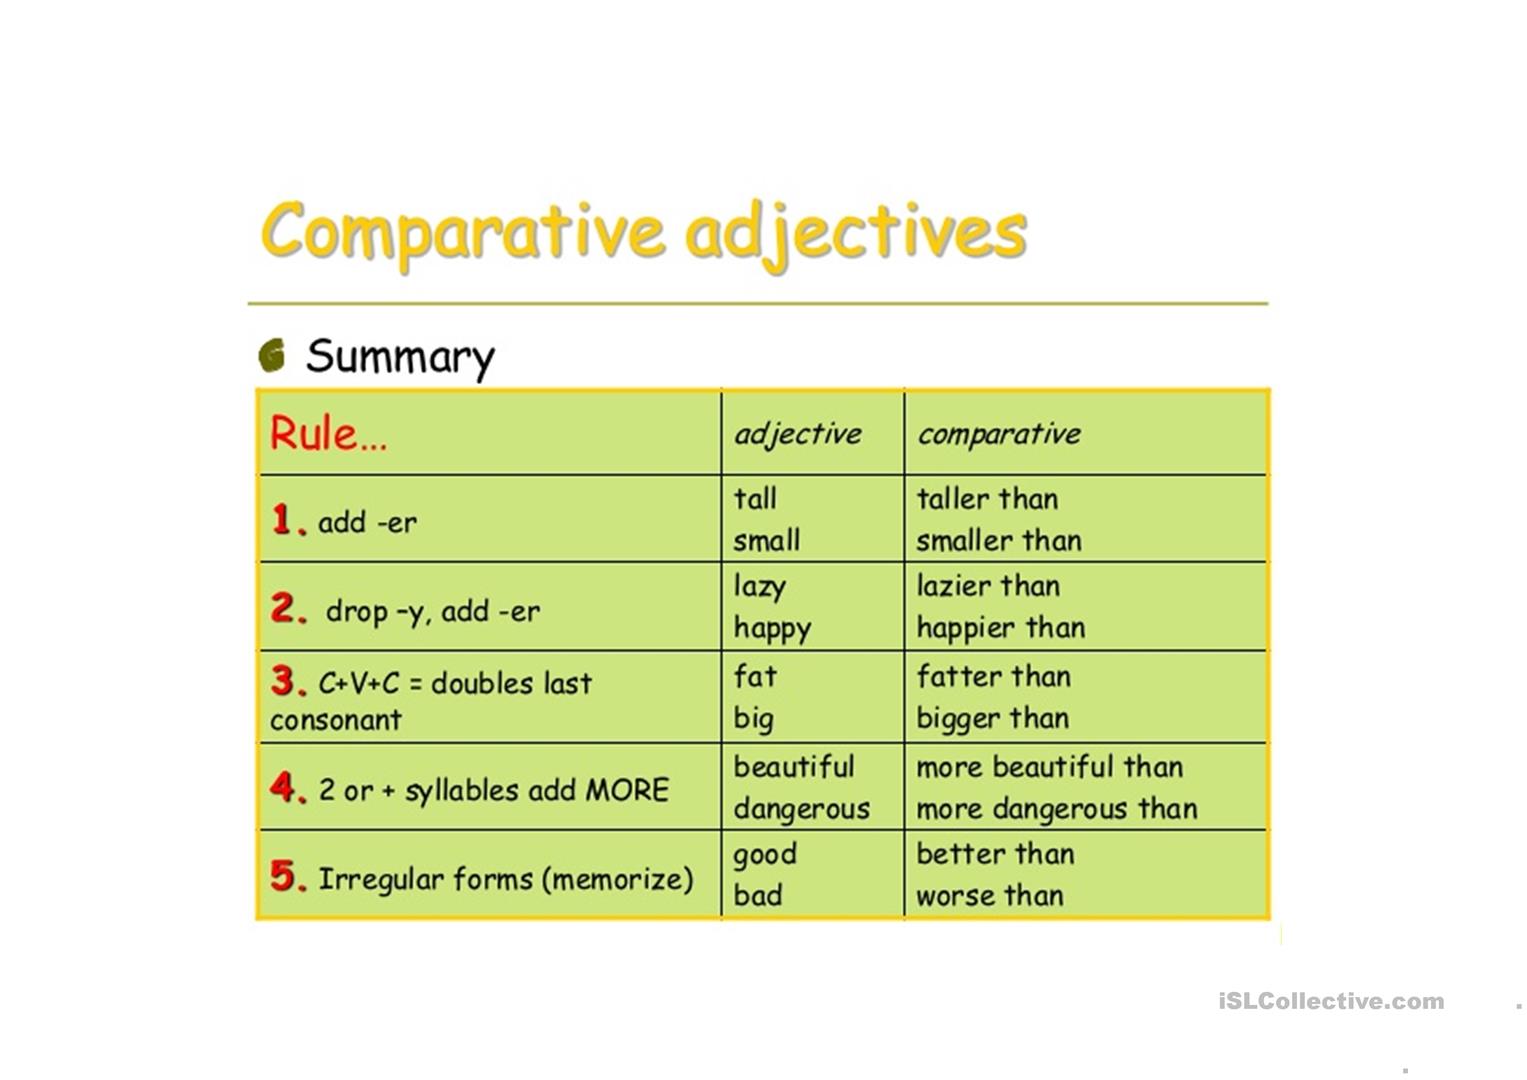 Adjectives таблица. Superlative adjectives правило. Superlative таблица. Таблица Comparative and Superlative. Superlative правило.